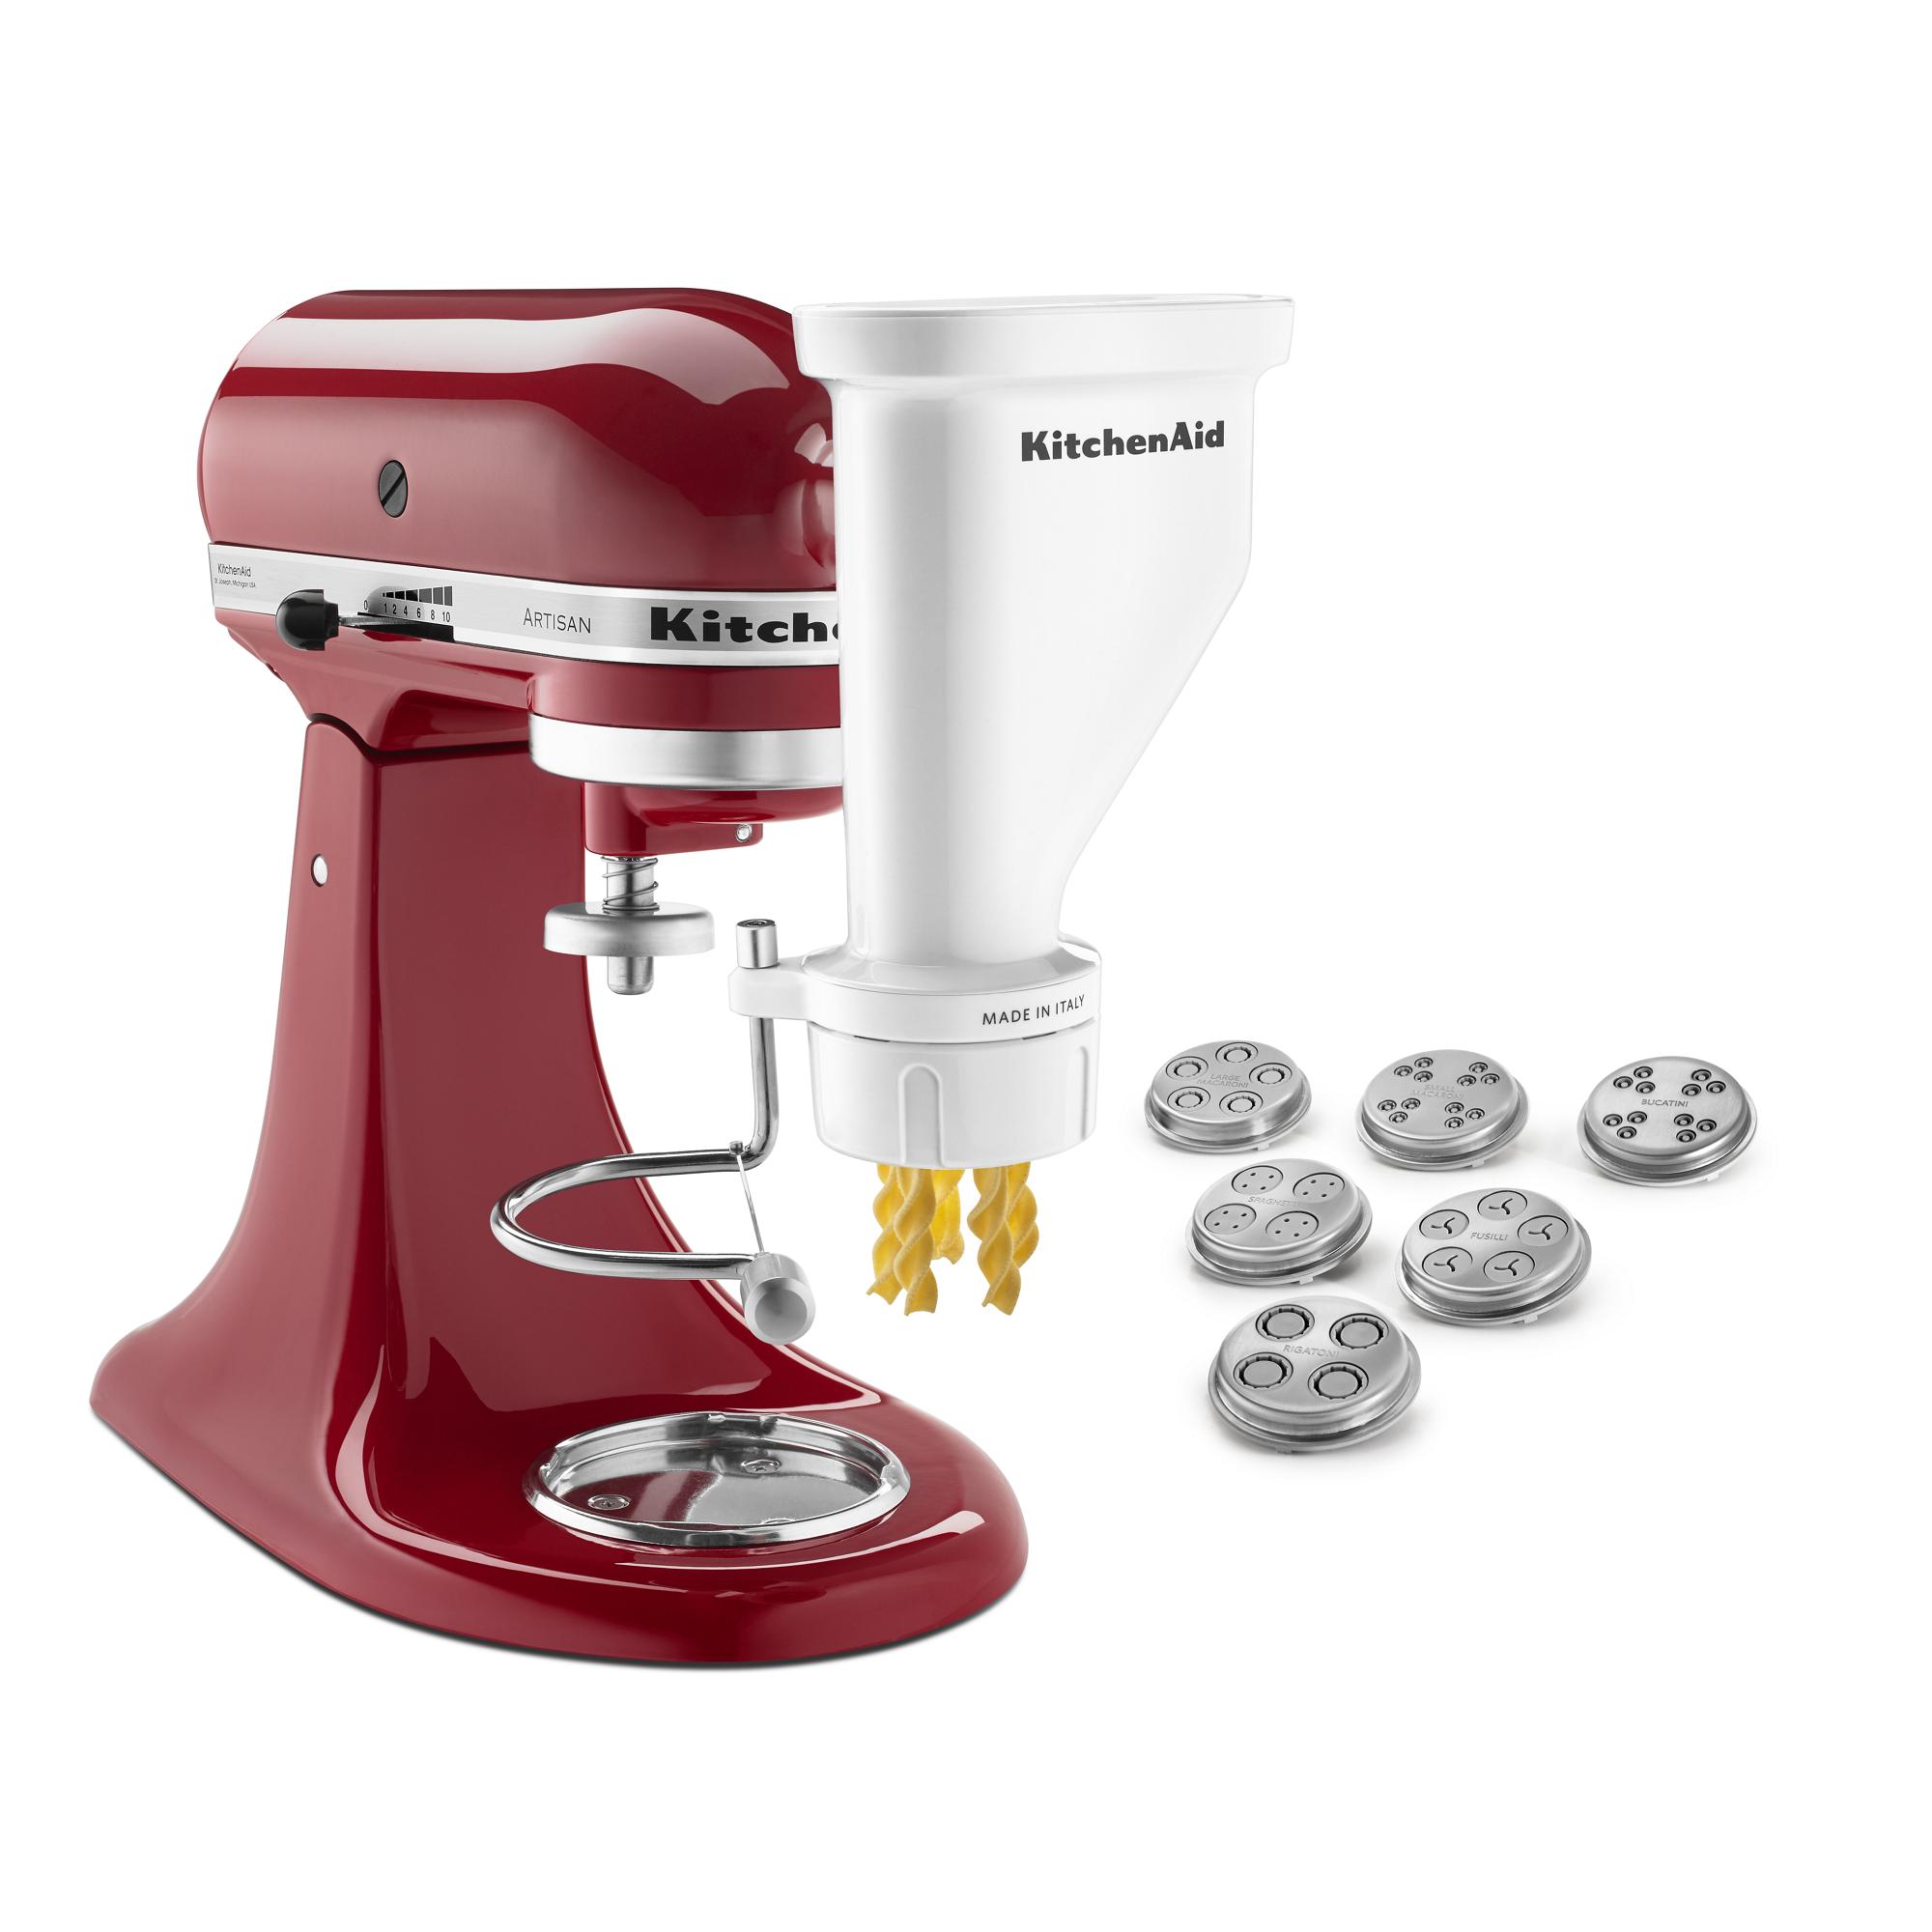 KitchenAid Pro 5 Plus Stand Mixer $219!